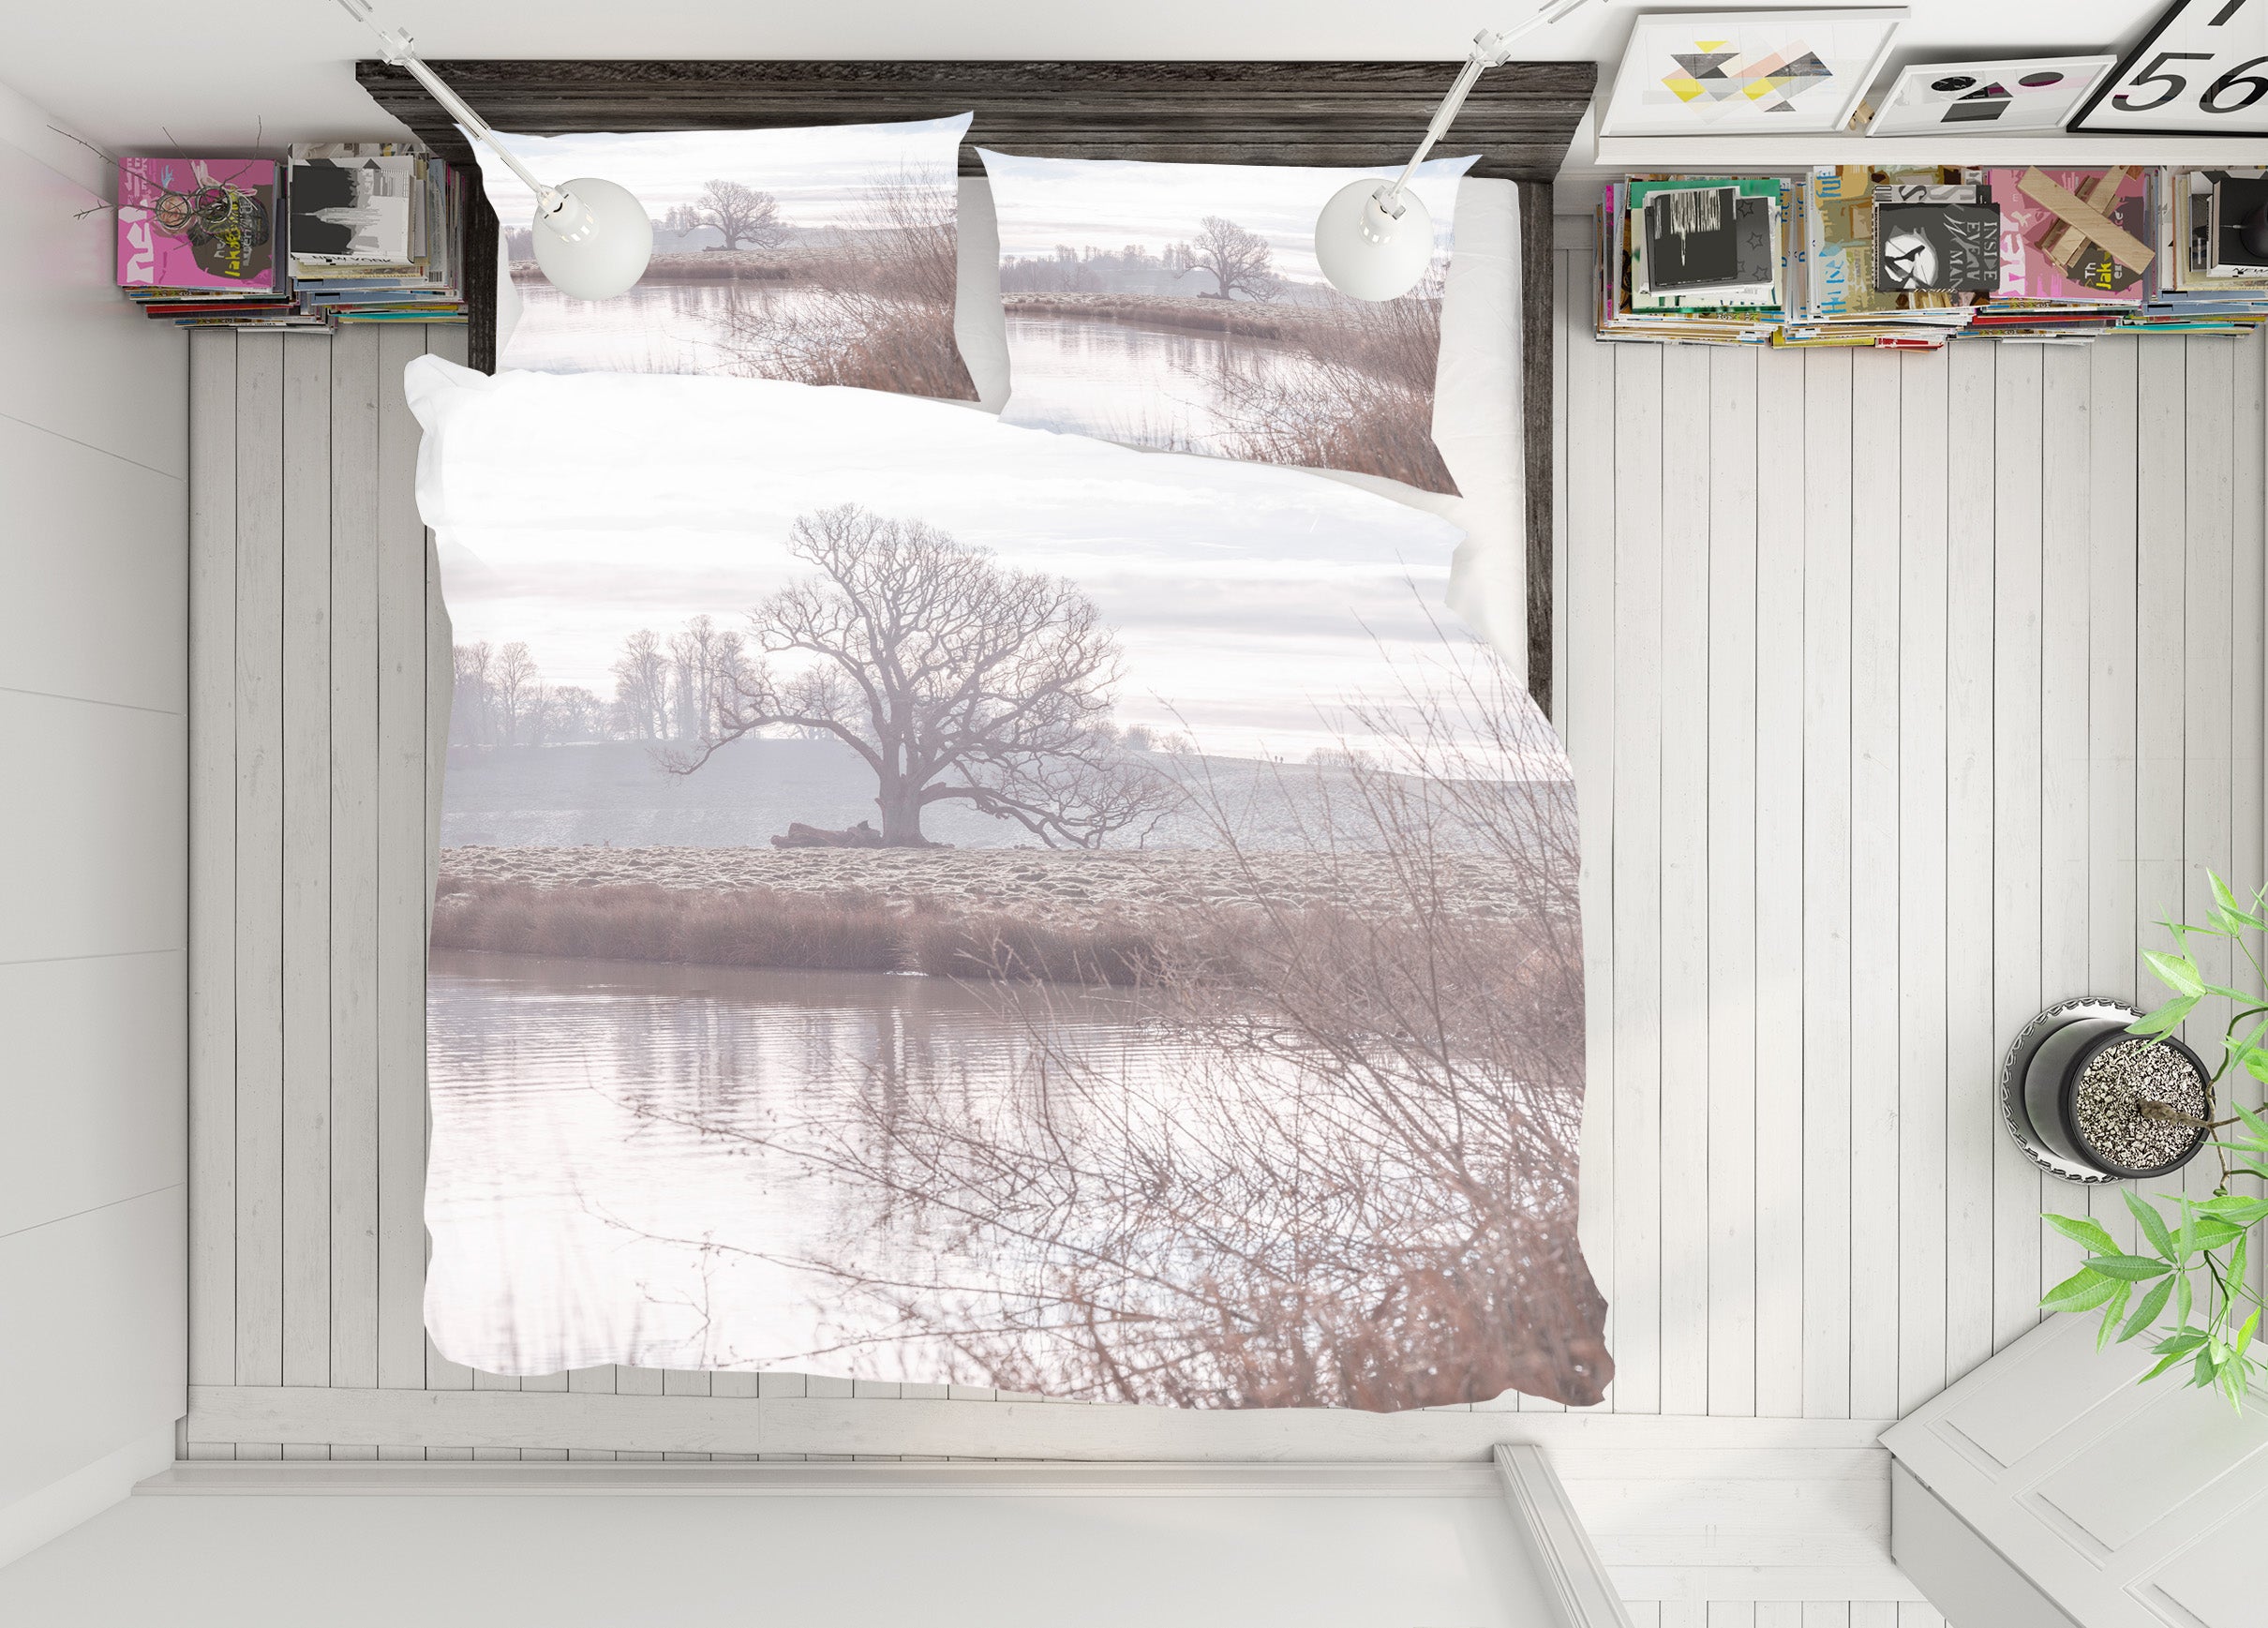 3D Tree Water 7140 Assaf Frank Bedding Bed Pillowcases Quilt Cover Duvet Cover